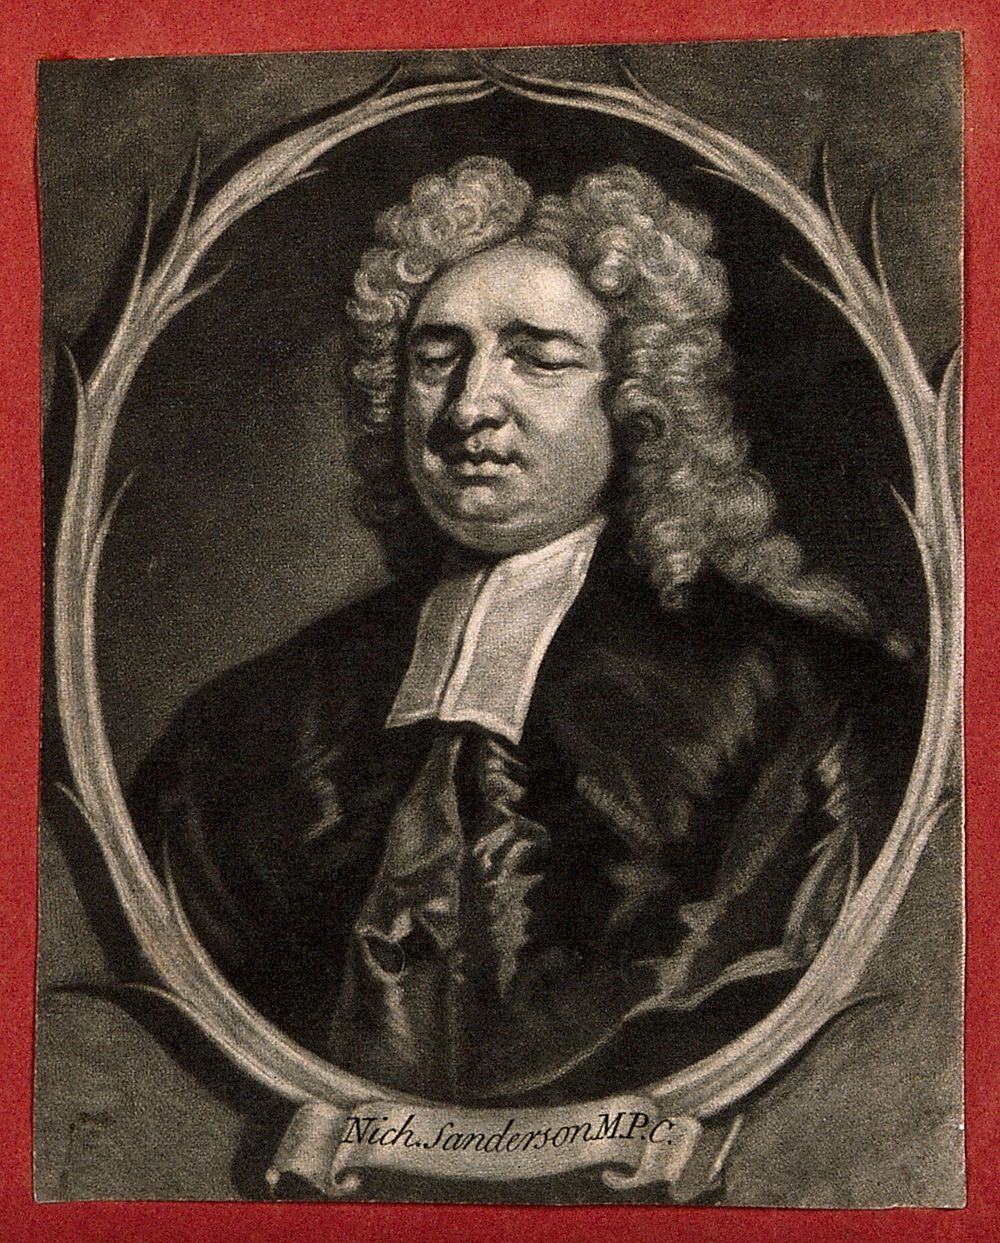 Nicholas Sanderson (Saunderson). Mezzotint by F. Kyte, after 1726, after J. Vanderbank.